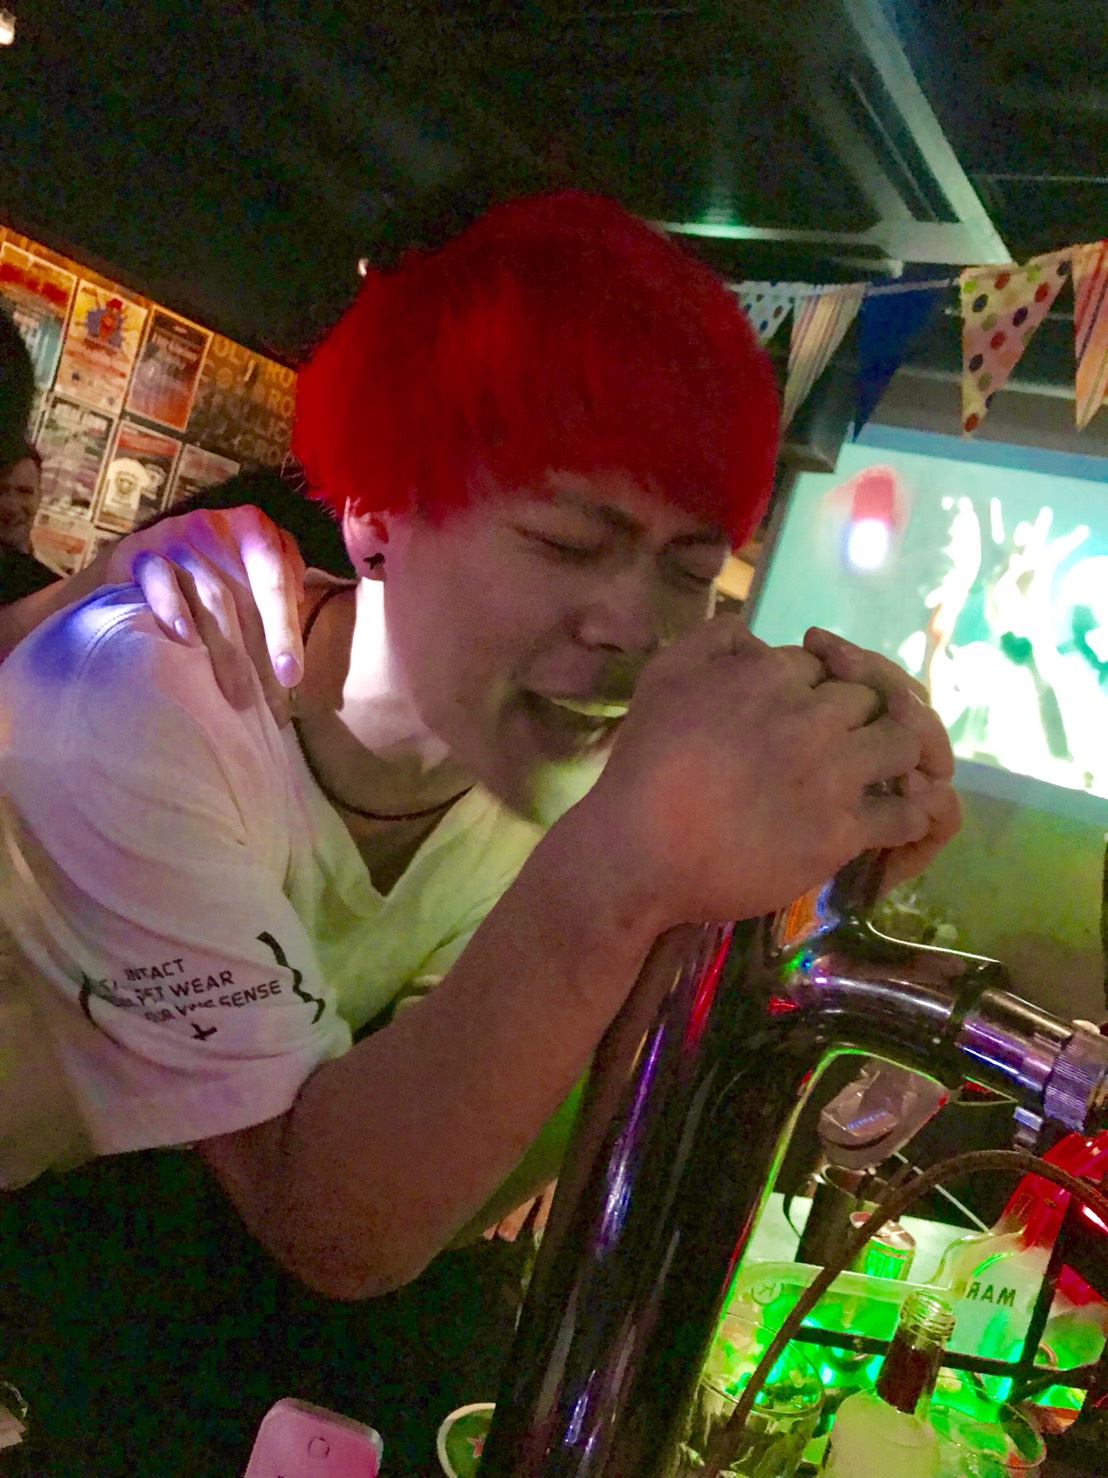 https://bar-rockaholic.jp/shibuya/blog/2019/05/28/seiya.jpg